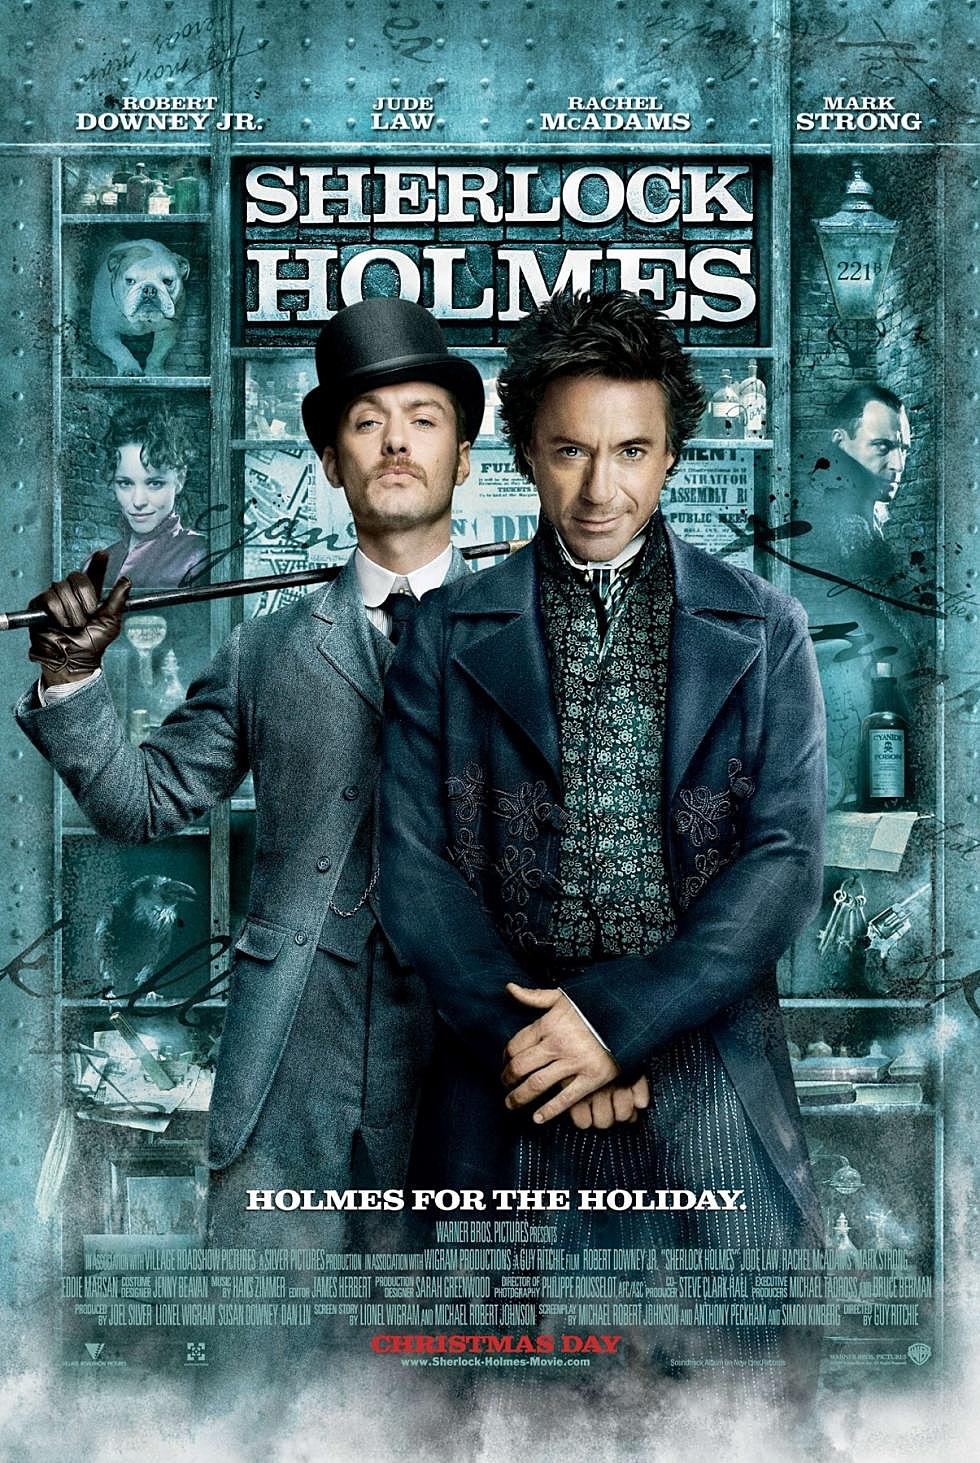 Tiffany’s Spoiler Movie Review: Sherlock Holmes